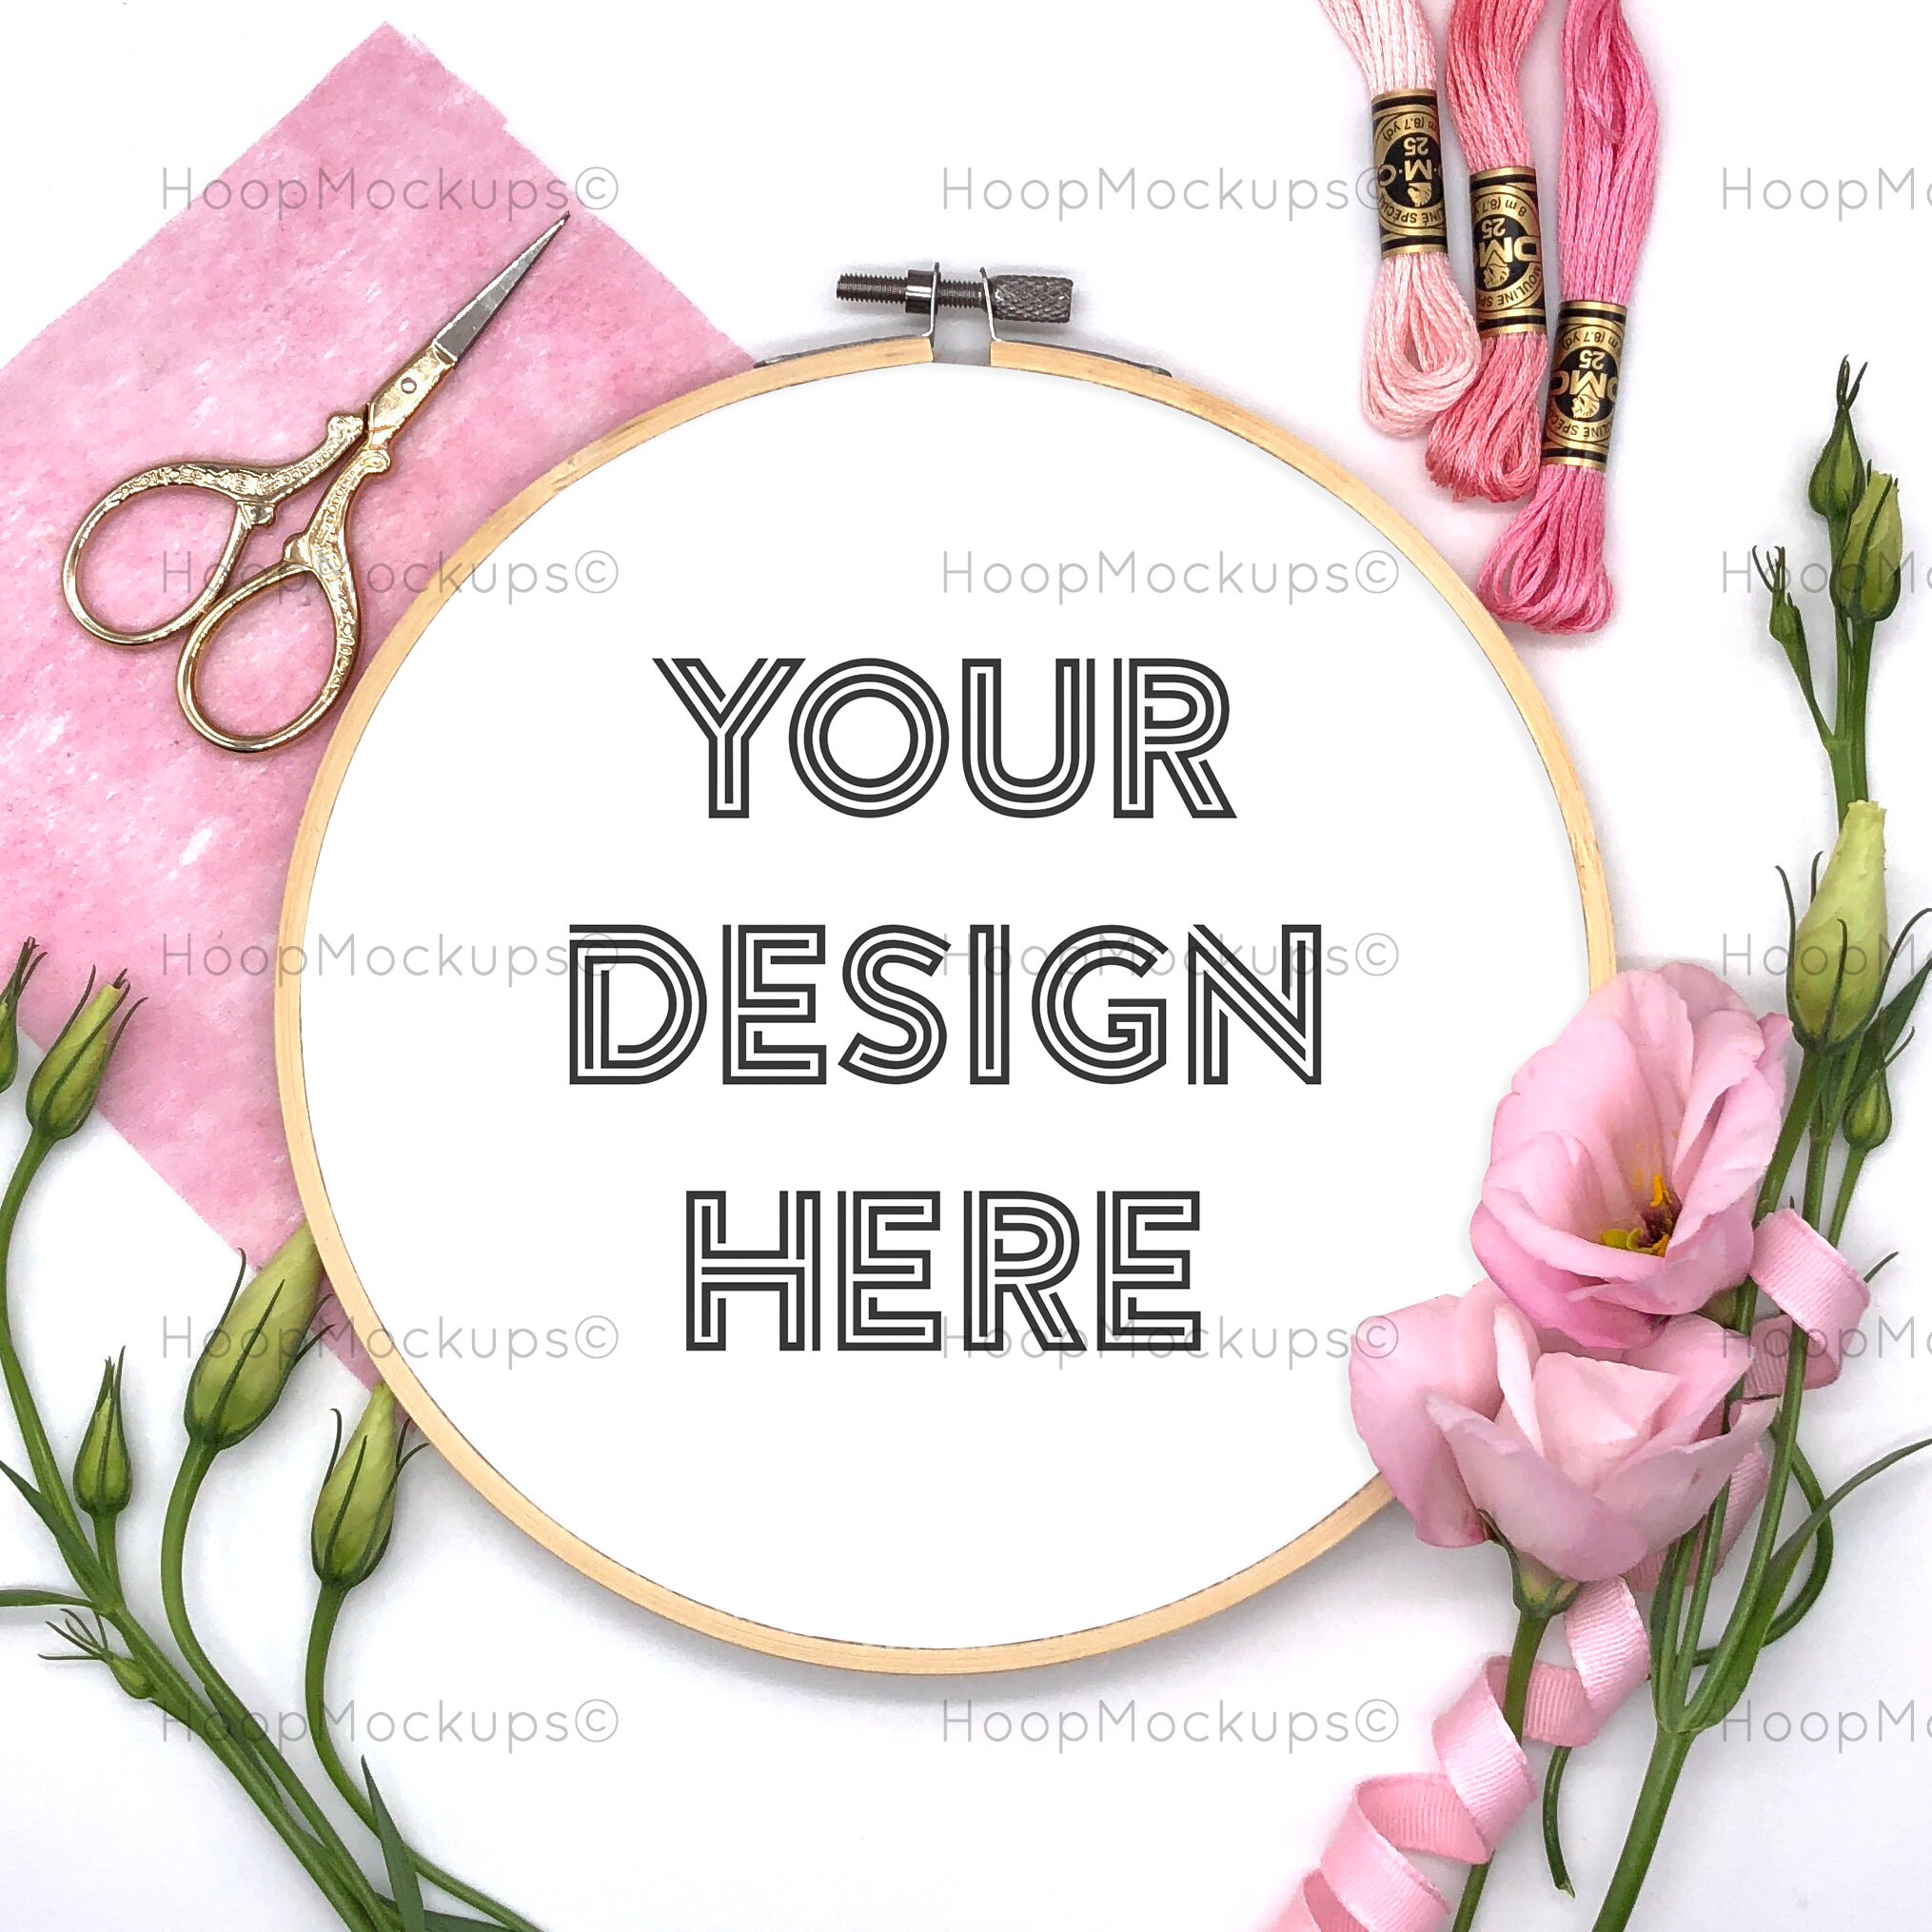 Download Embroidery hoop mockup Cross stitch pattern frame mockup ...